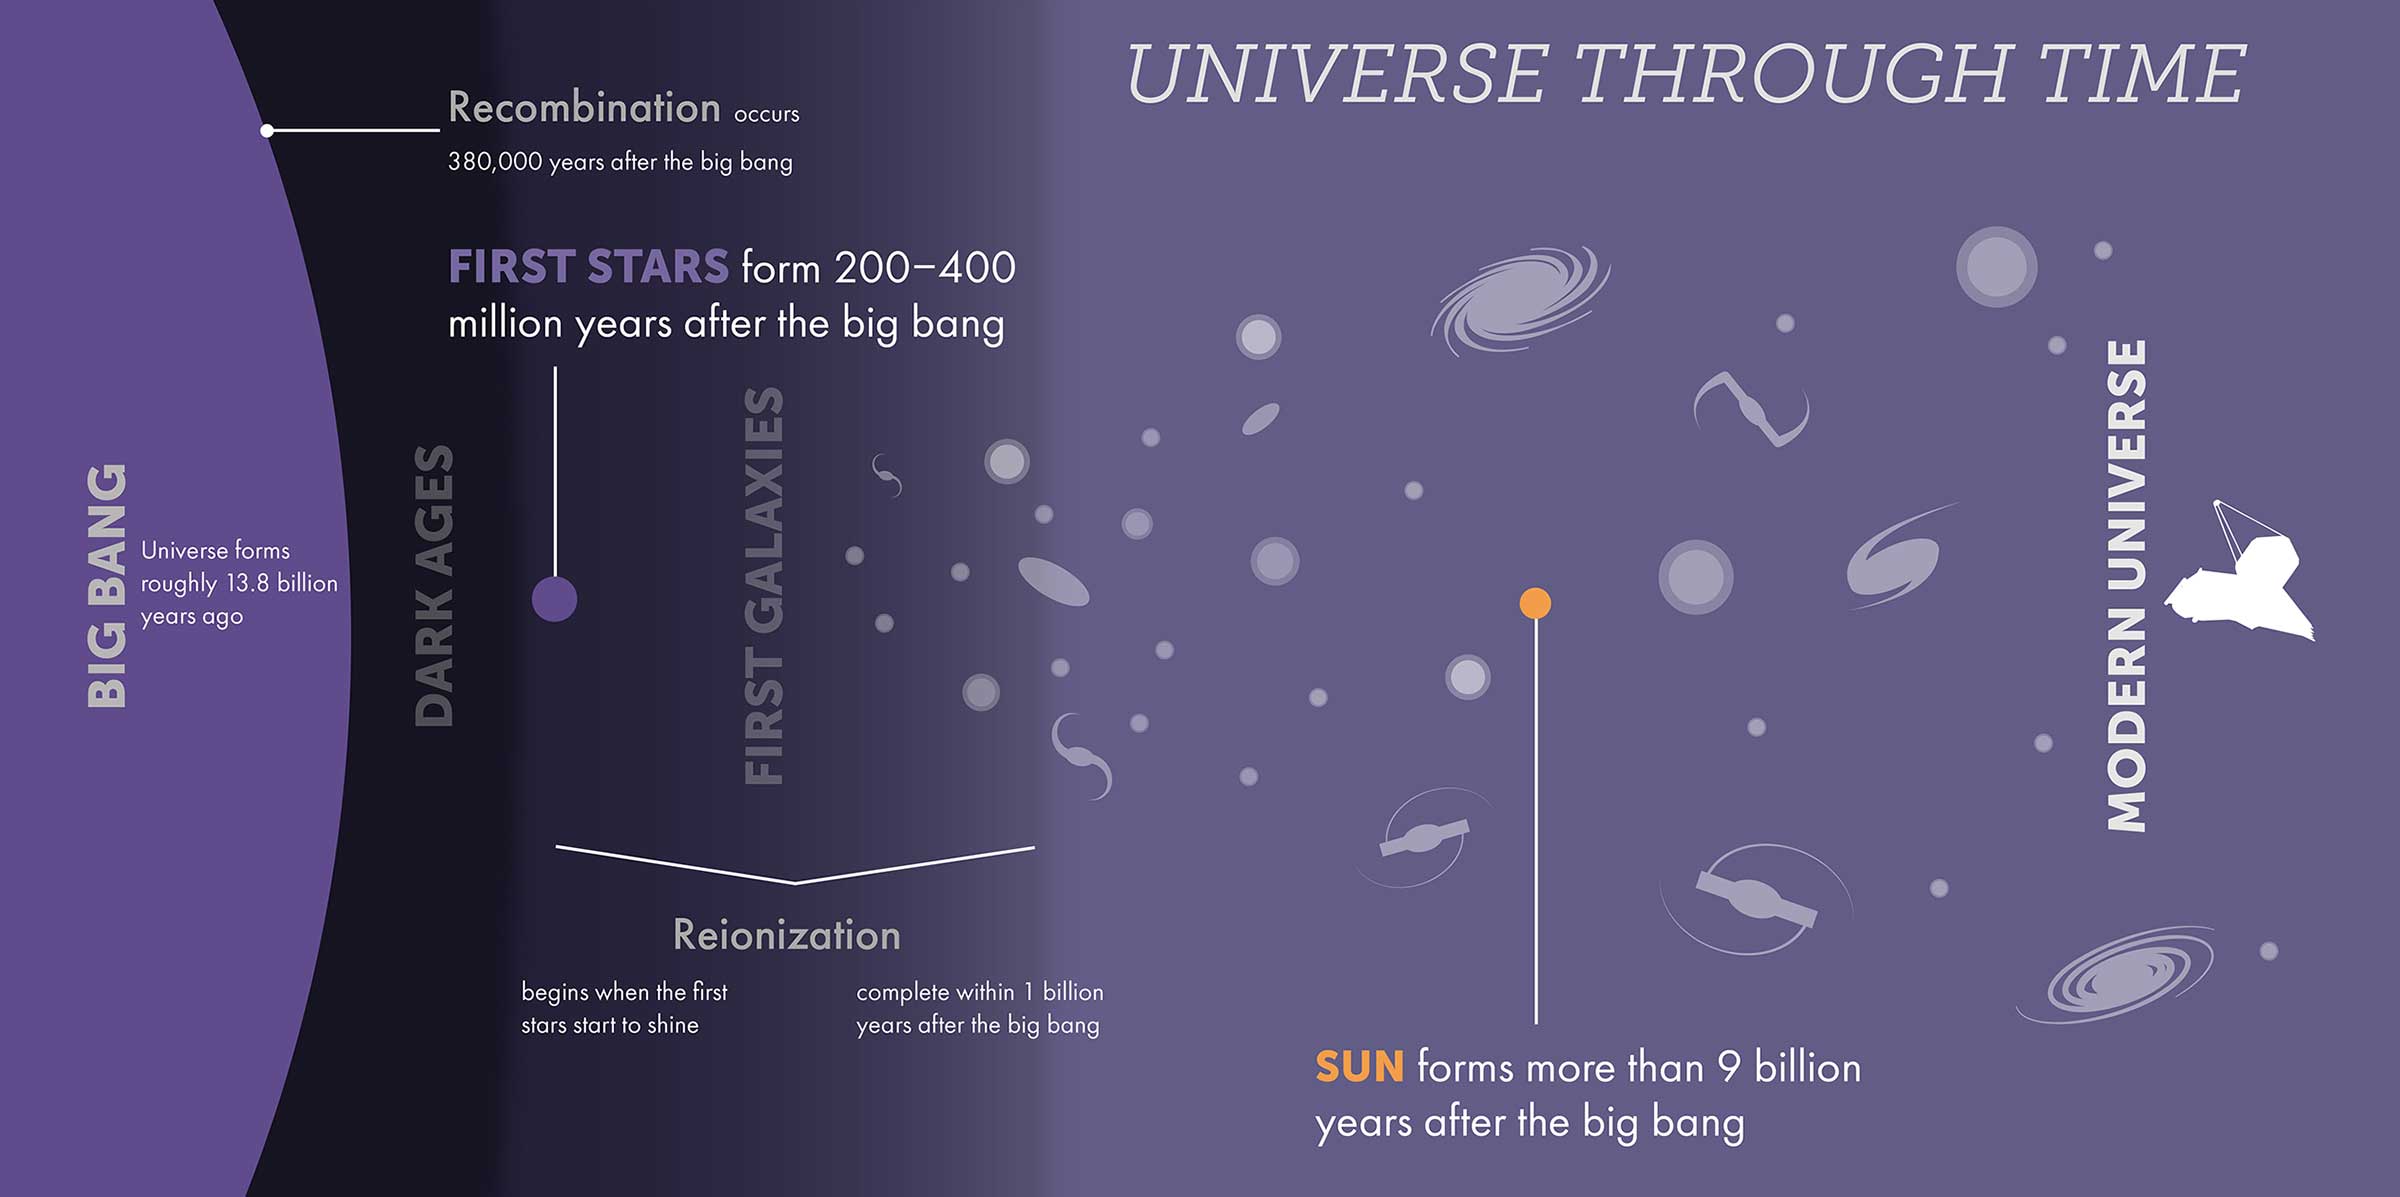 STScI Universe through Time 2400x1200 1